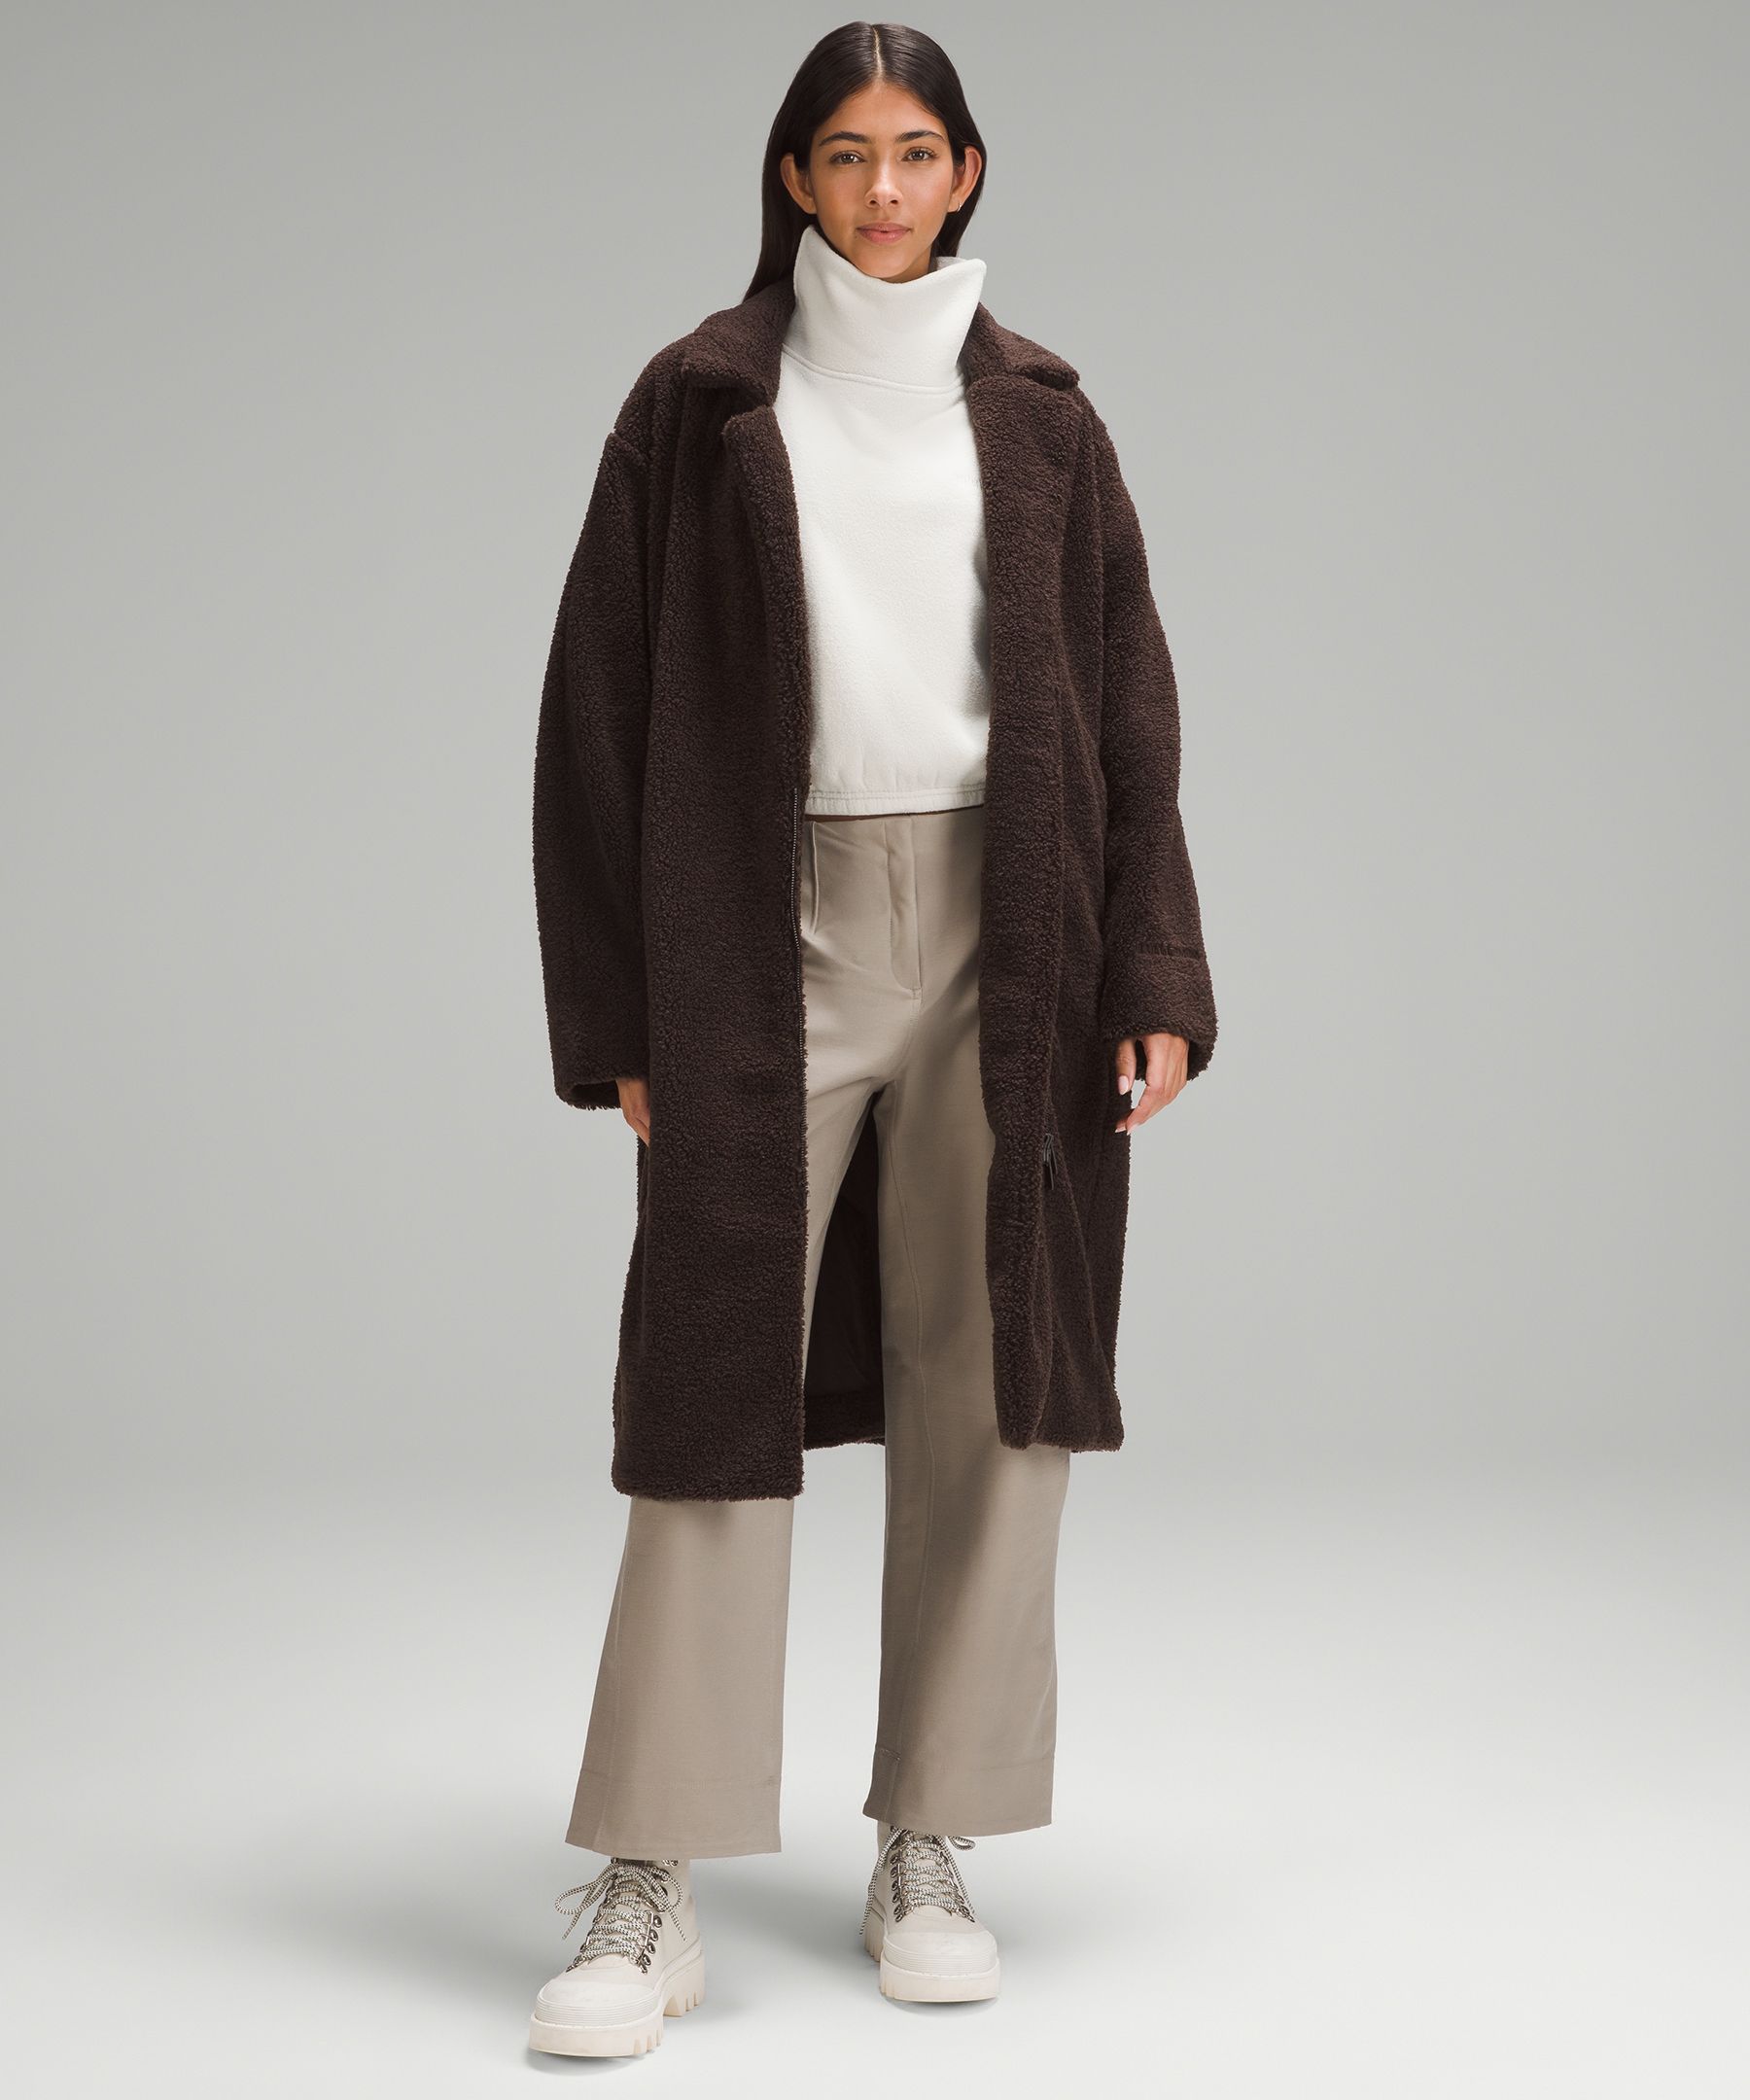 Textured Fleece Long Collared Jacket, Women's Hoodies & Sweatshirts